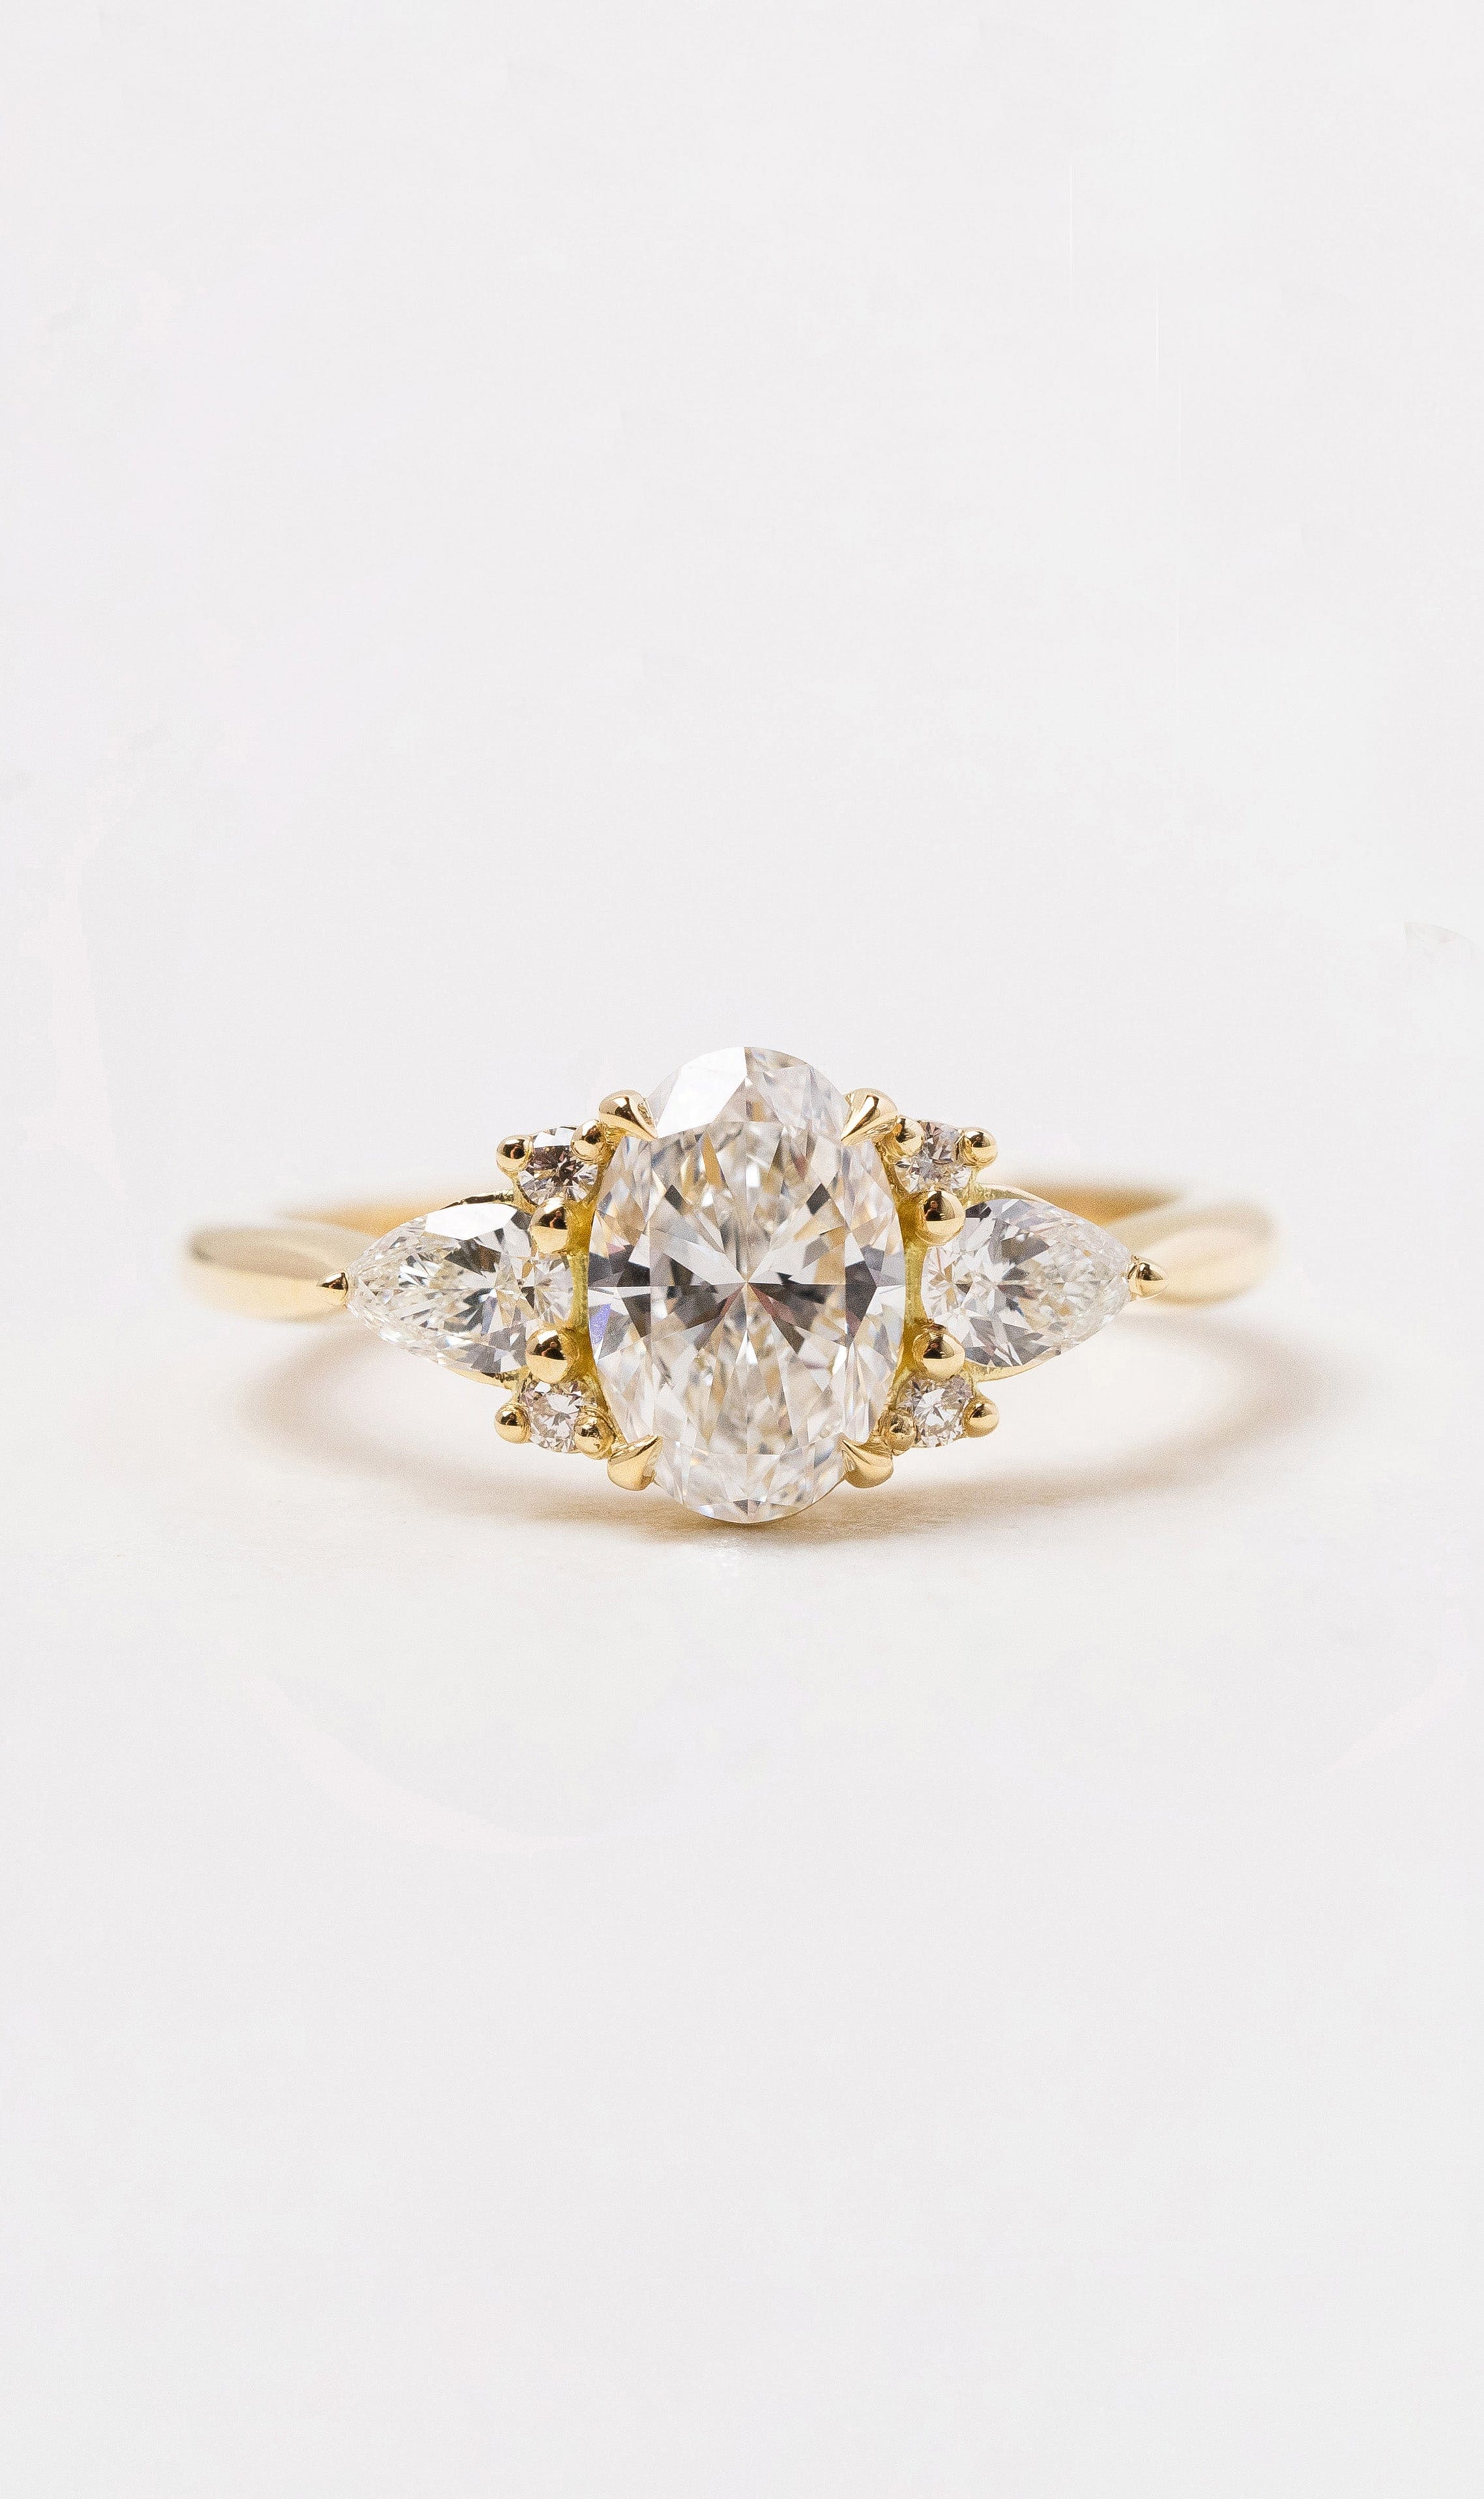 Hogans Family Jewellers 18K YG Vintage Style Diamond Ring